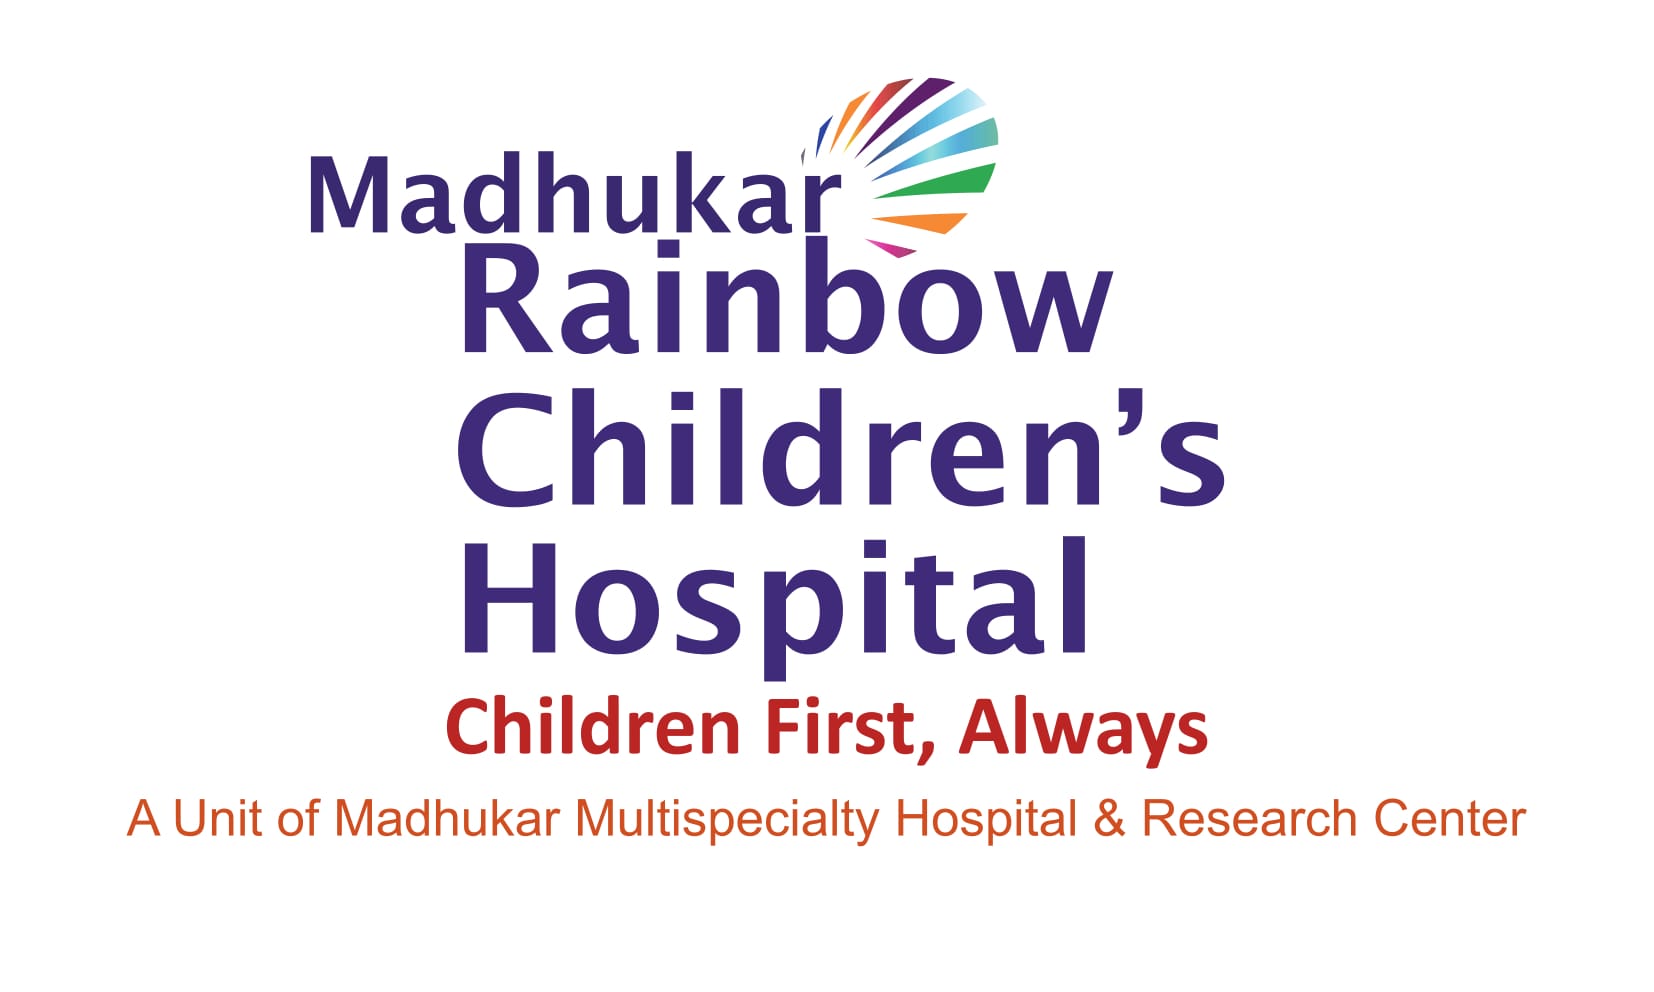 Madhukar Rainbow Children's Hospital|Hospitals|Medical Services